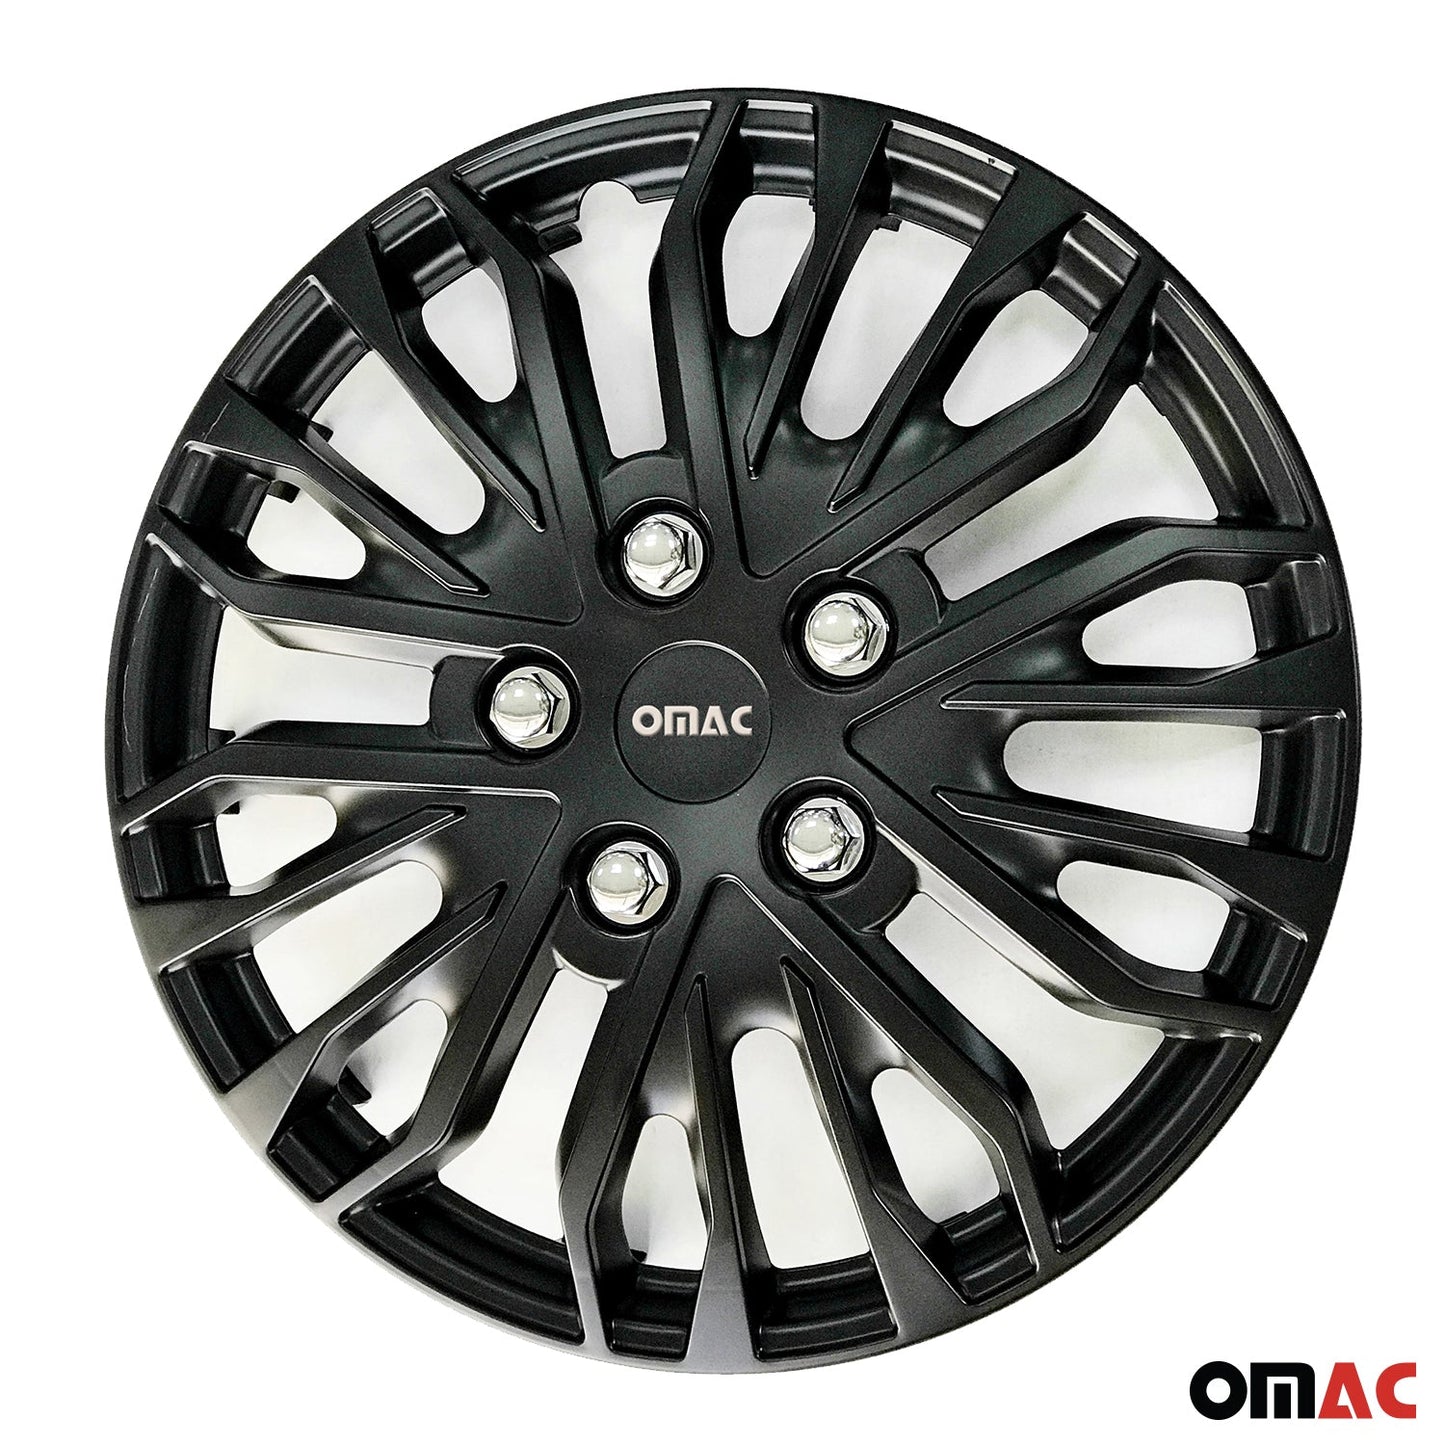 OMAC 14" Wheel Covers Guard Hub Caps Durable Snap On ABS Matt Black Silver 4x OMAC-WE41-MBK14